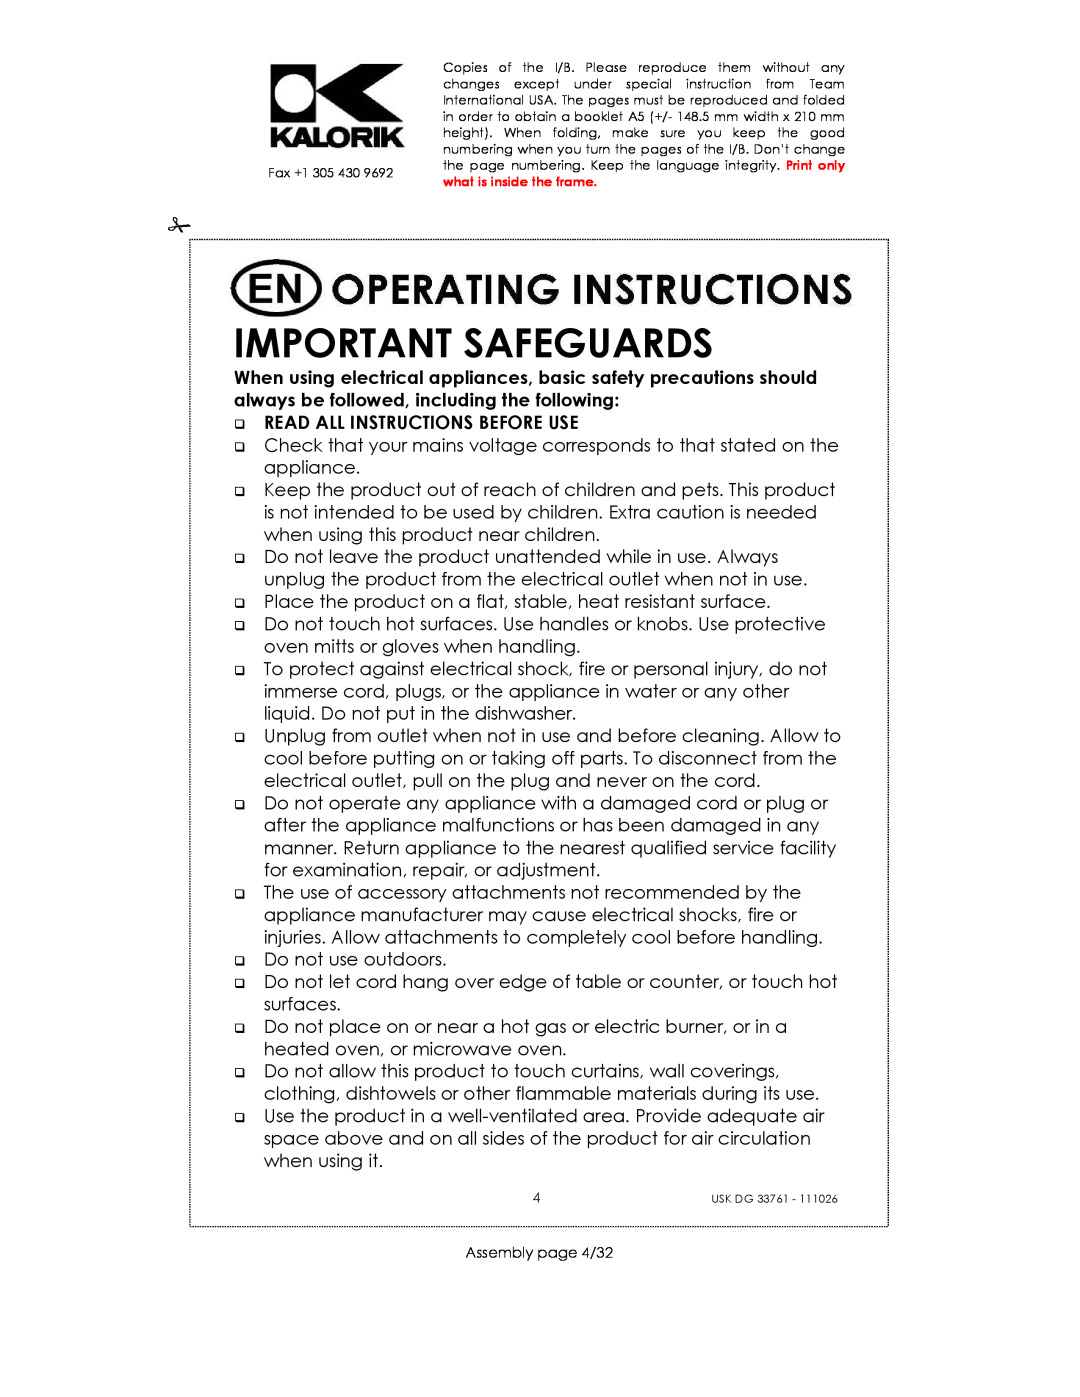 Kalorik USK DG 33761 manual Important Safeguards, Read All Instructions Before Use 